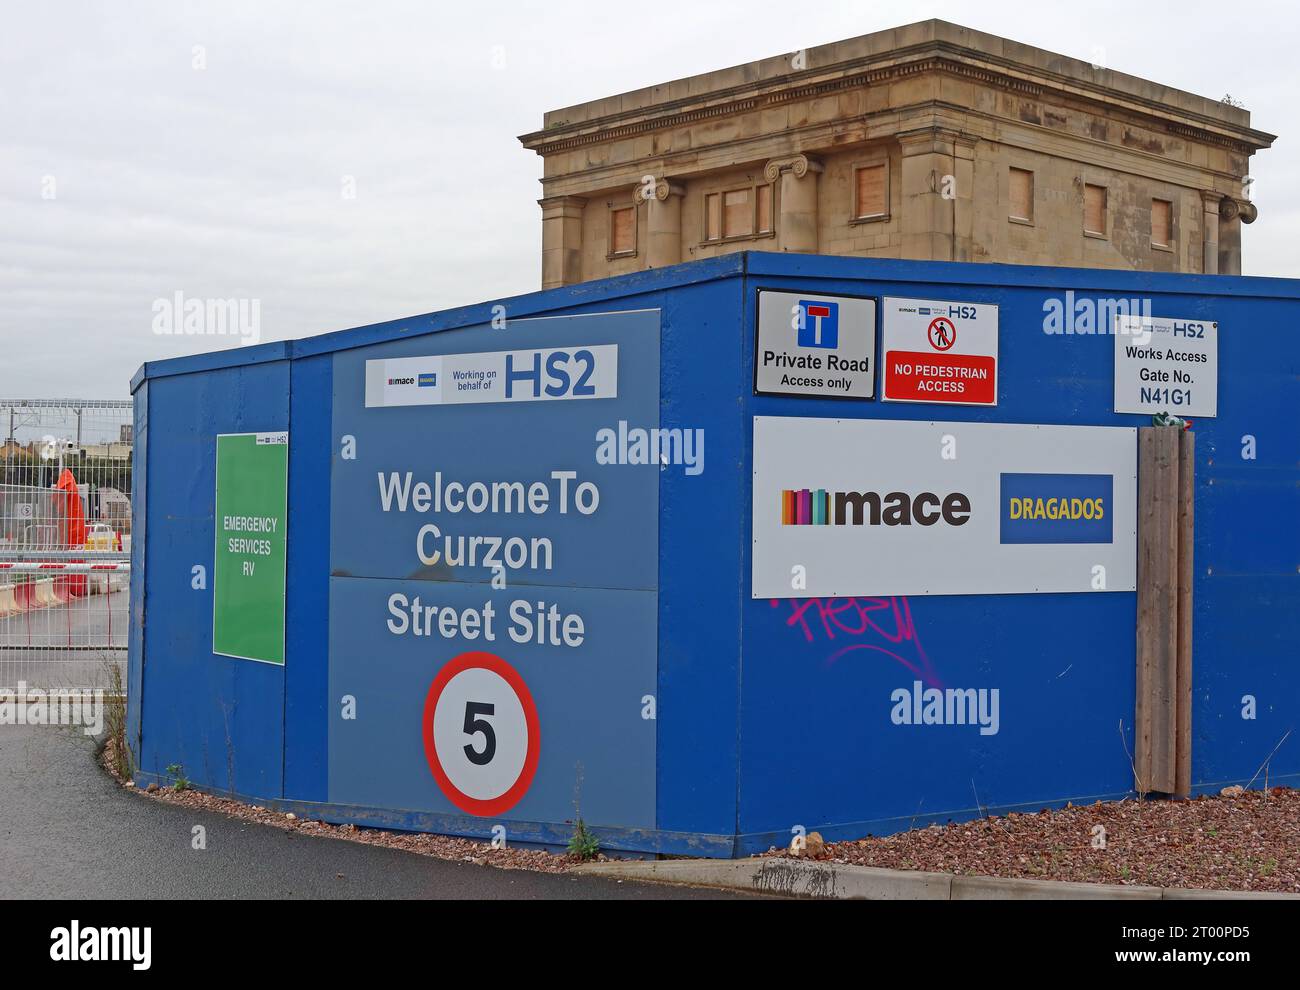 HS2-Standort Mace & Dragados Gates in Birmingham Curzon St, Bahnhof, Central Birmingham, West Midlands, England, UK, B4 7XG Stockfoto